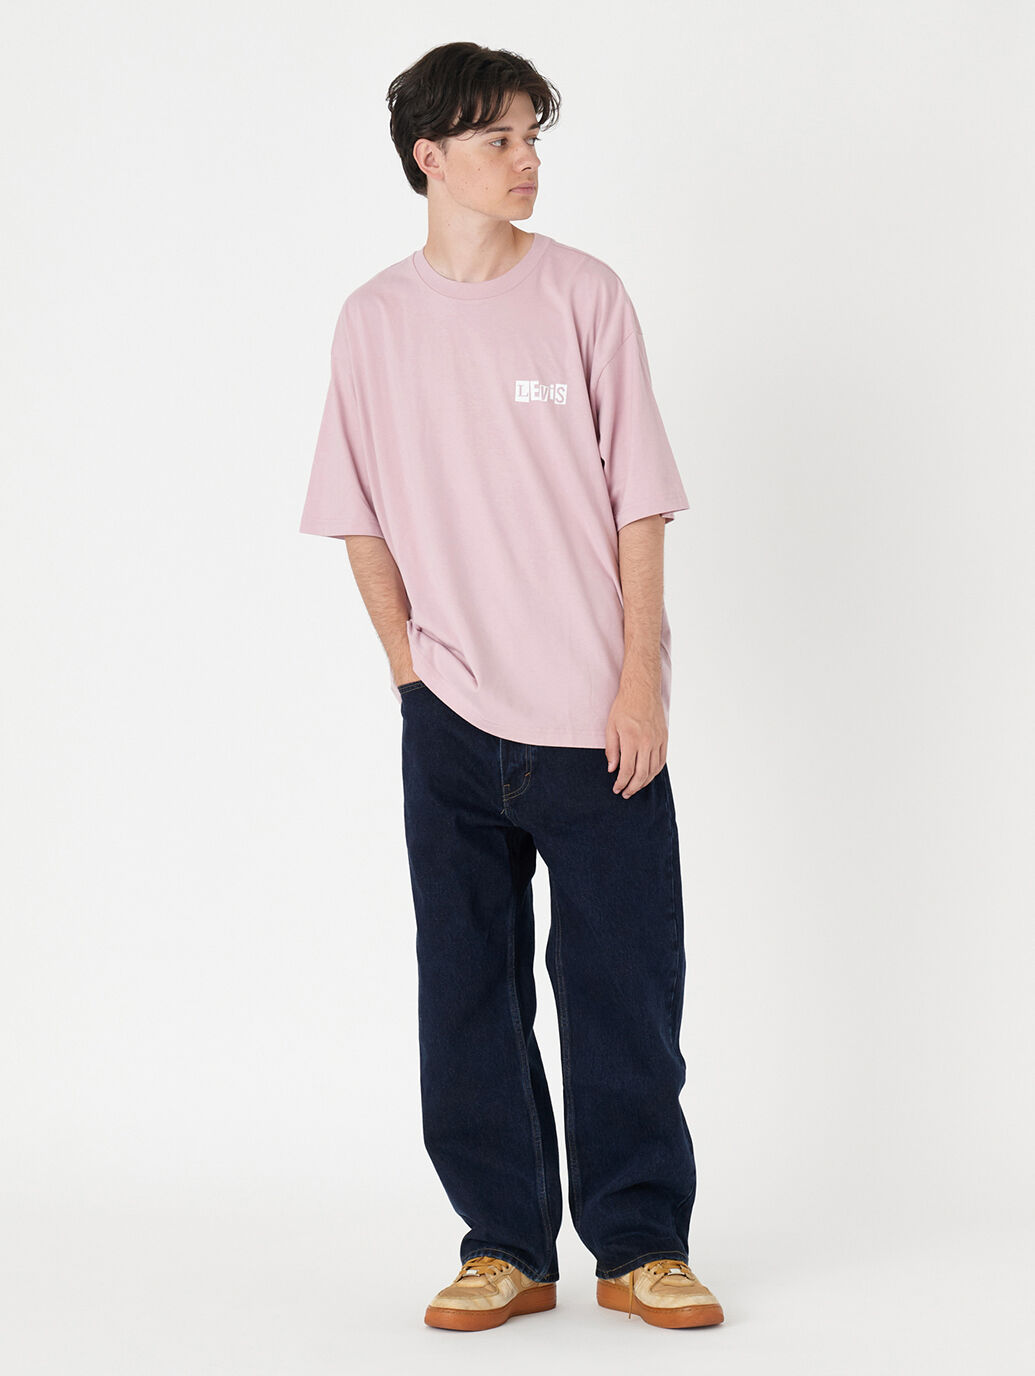 FINE BOYS 11月号掲載】LEVI'S® SKATE グラフィック Tシャツ ピンク